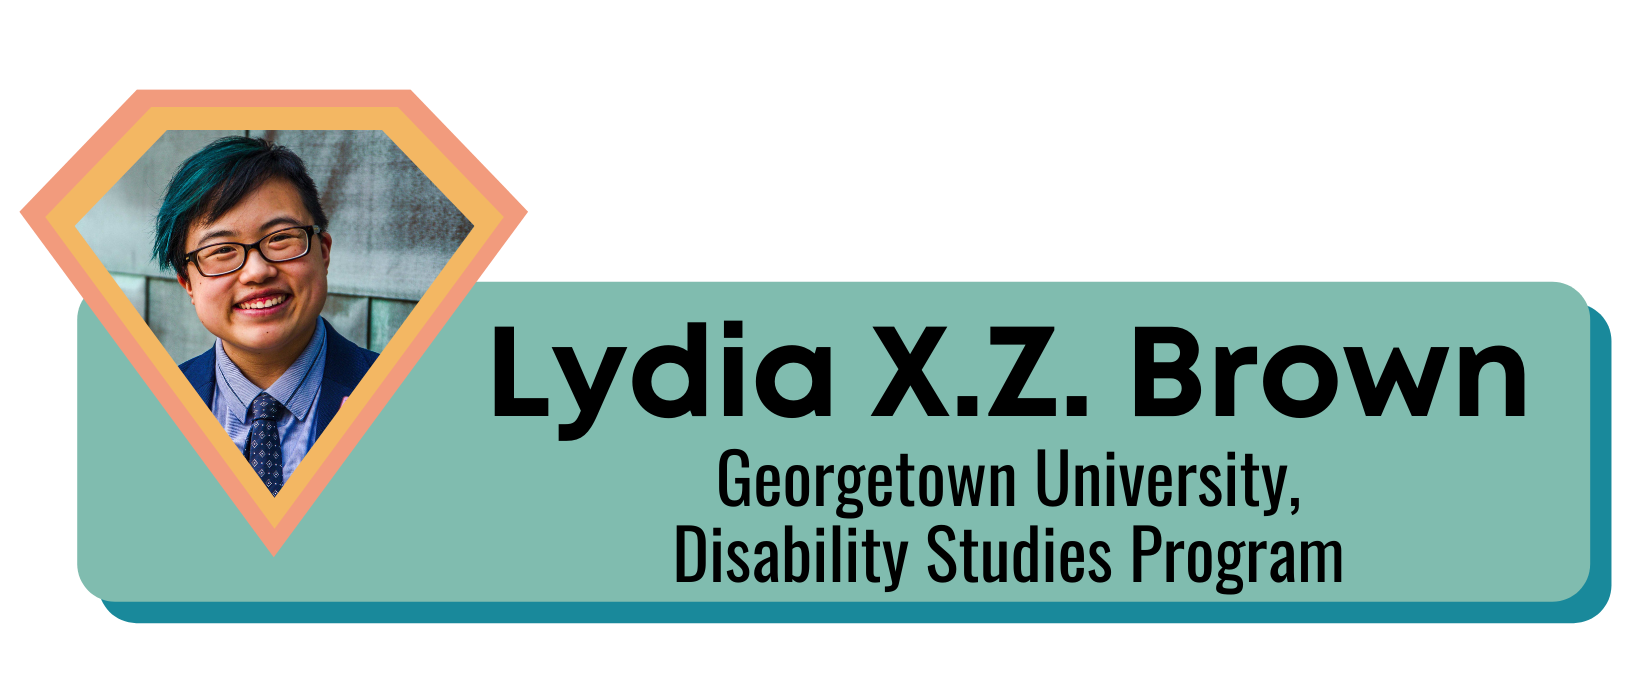 Lydia X.Z. Brown, Georgetown University, Disability Studies Program